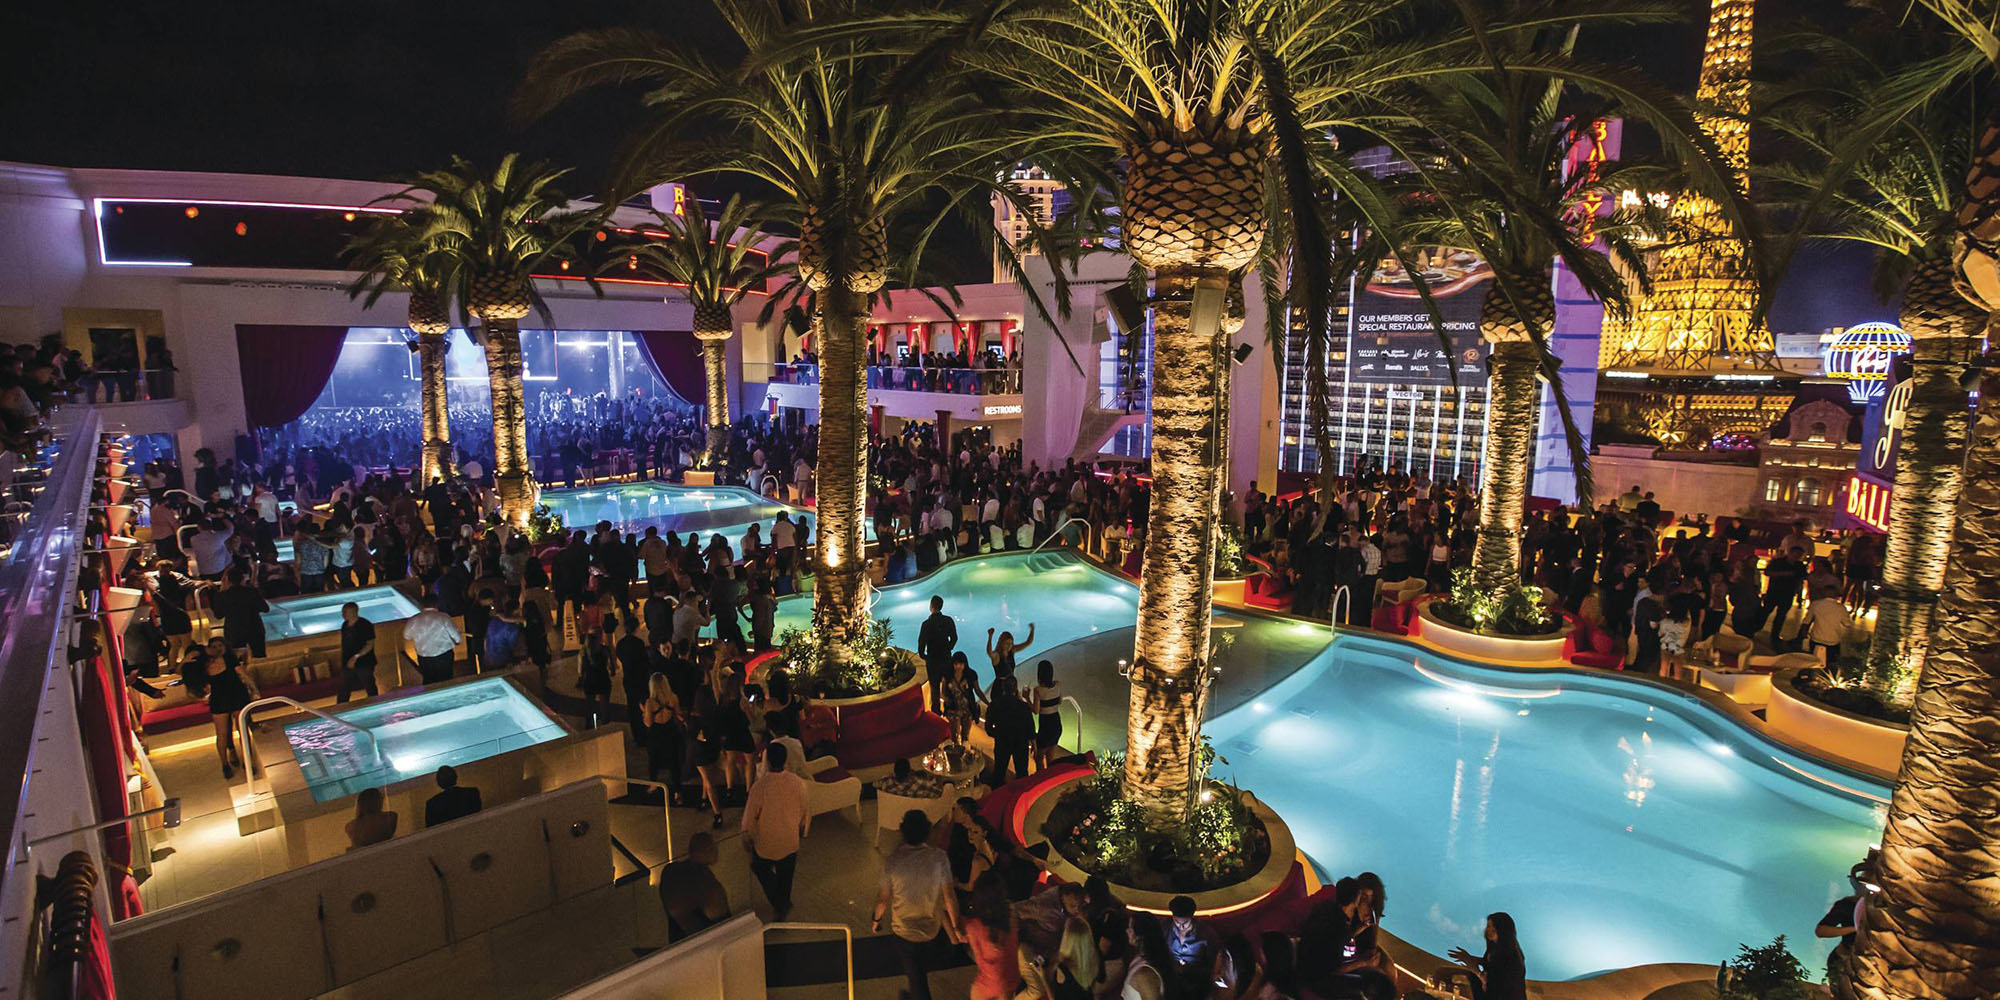 Las Vegas Paris Hotel Pool Party Swimmin, Stock Video